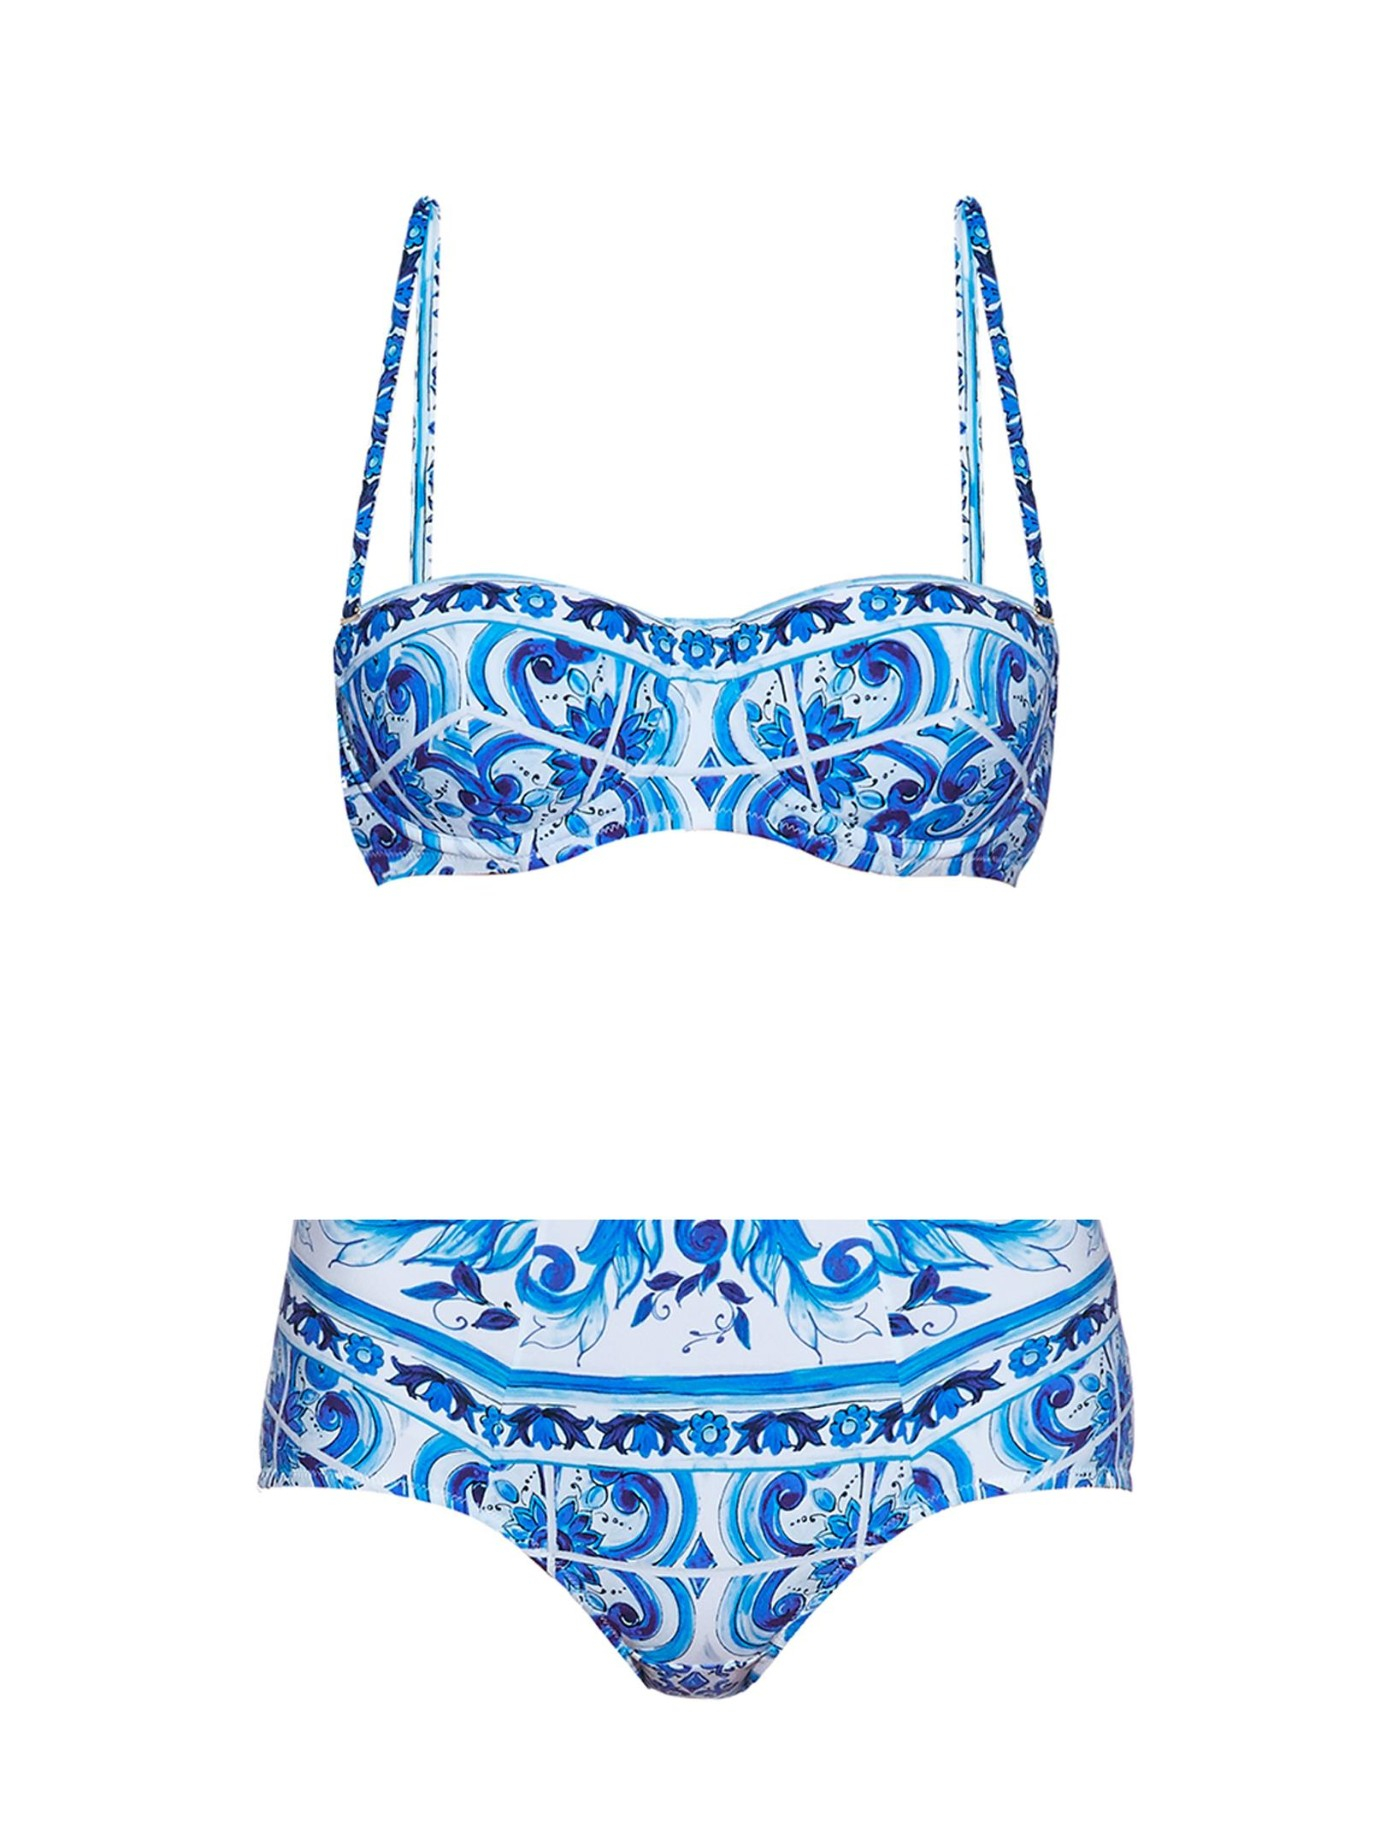 Lyst - Dolce & Gabbana Majolica-print Bikini in Blue